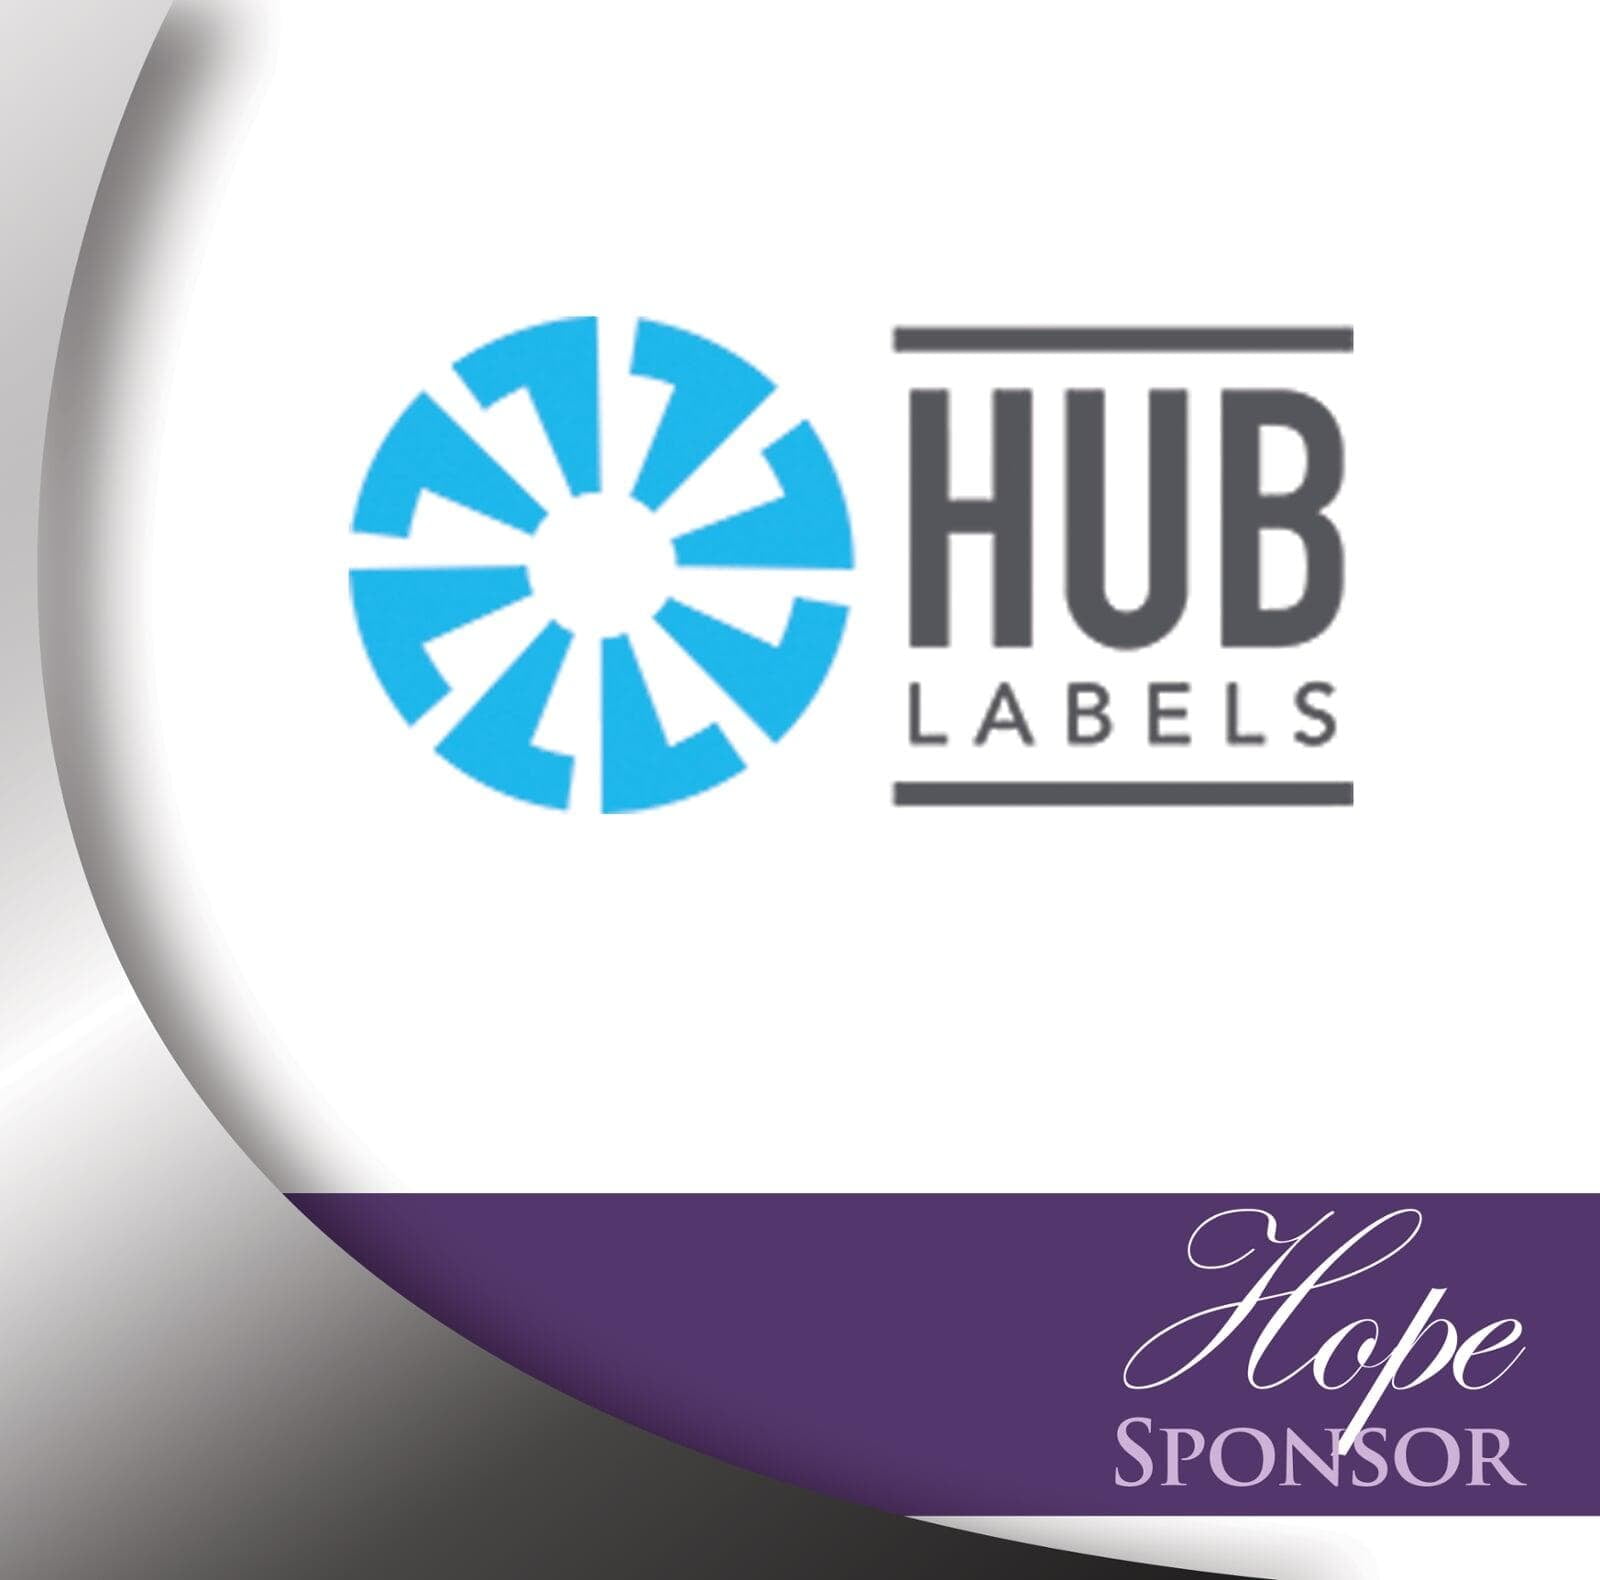 Hub Labels logo